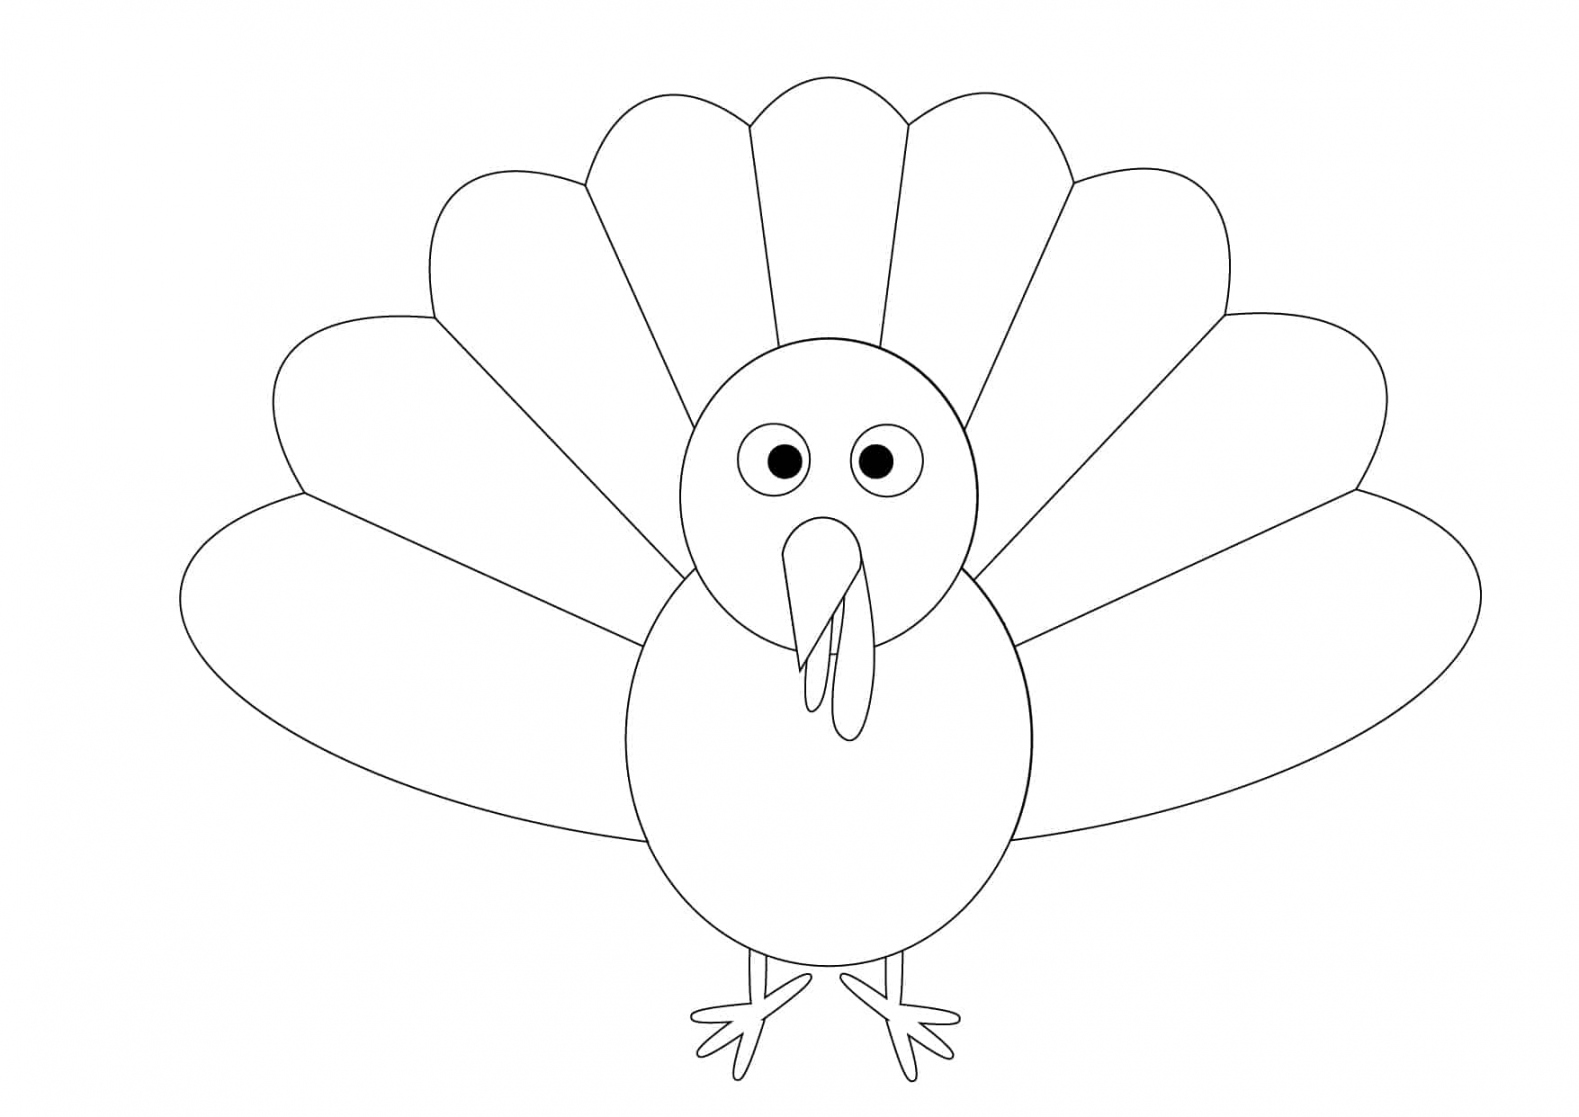 Crazy Turkey Art With Printable Turkey Template - Emma Owl - FREE Printables - Free Printable Turkey Template